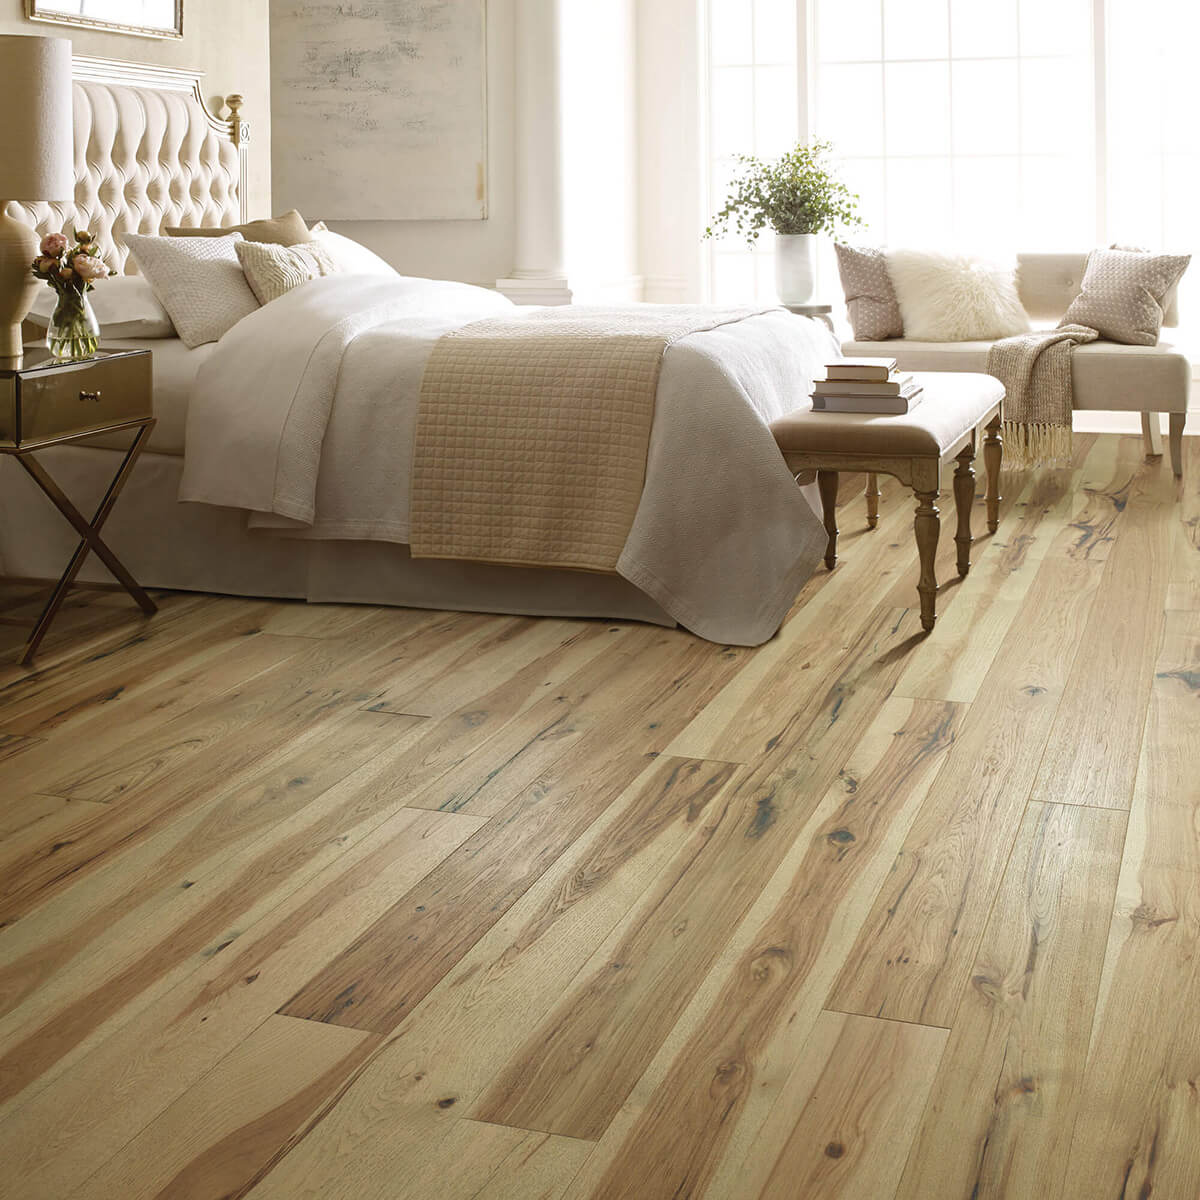 Hardwood flooring for bedroom | Baker Valley Floors